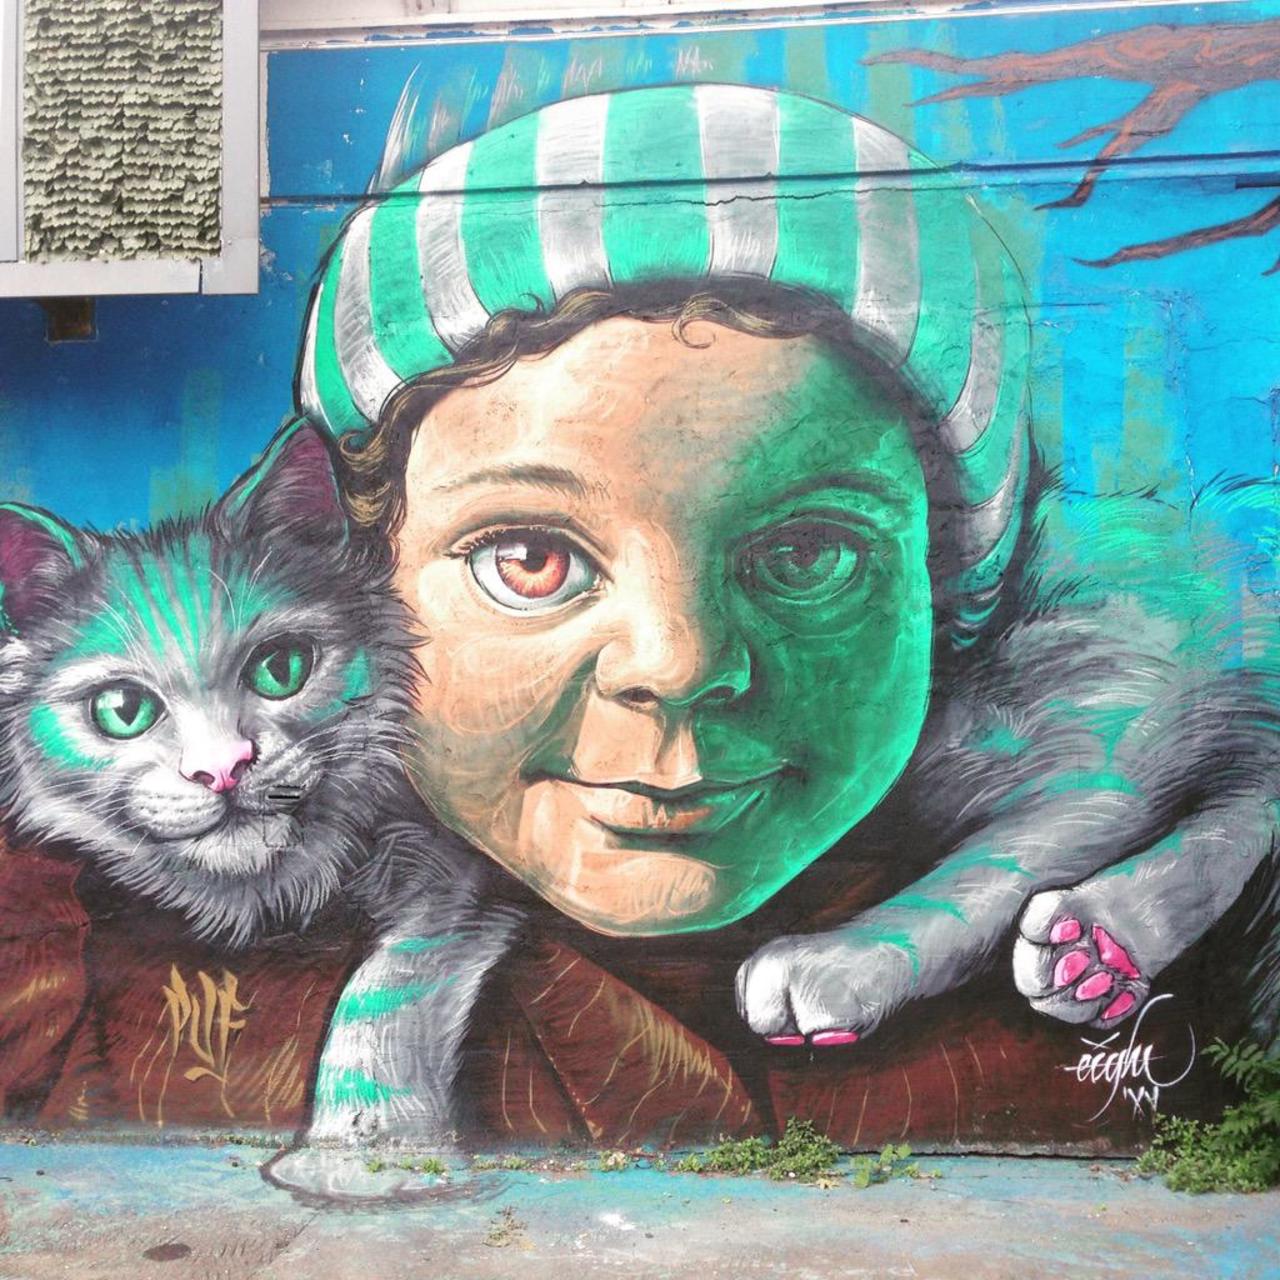 RT @TizianaRusso_it: #streetart #milano #graffiti #graffitiart http://t.co/FMW7Kv3pSr